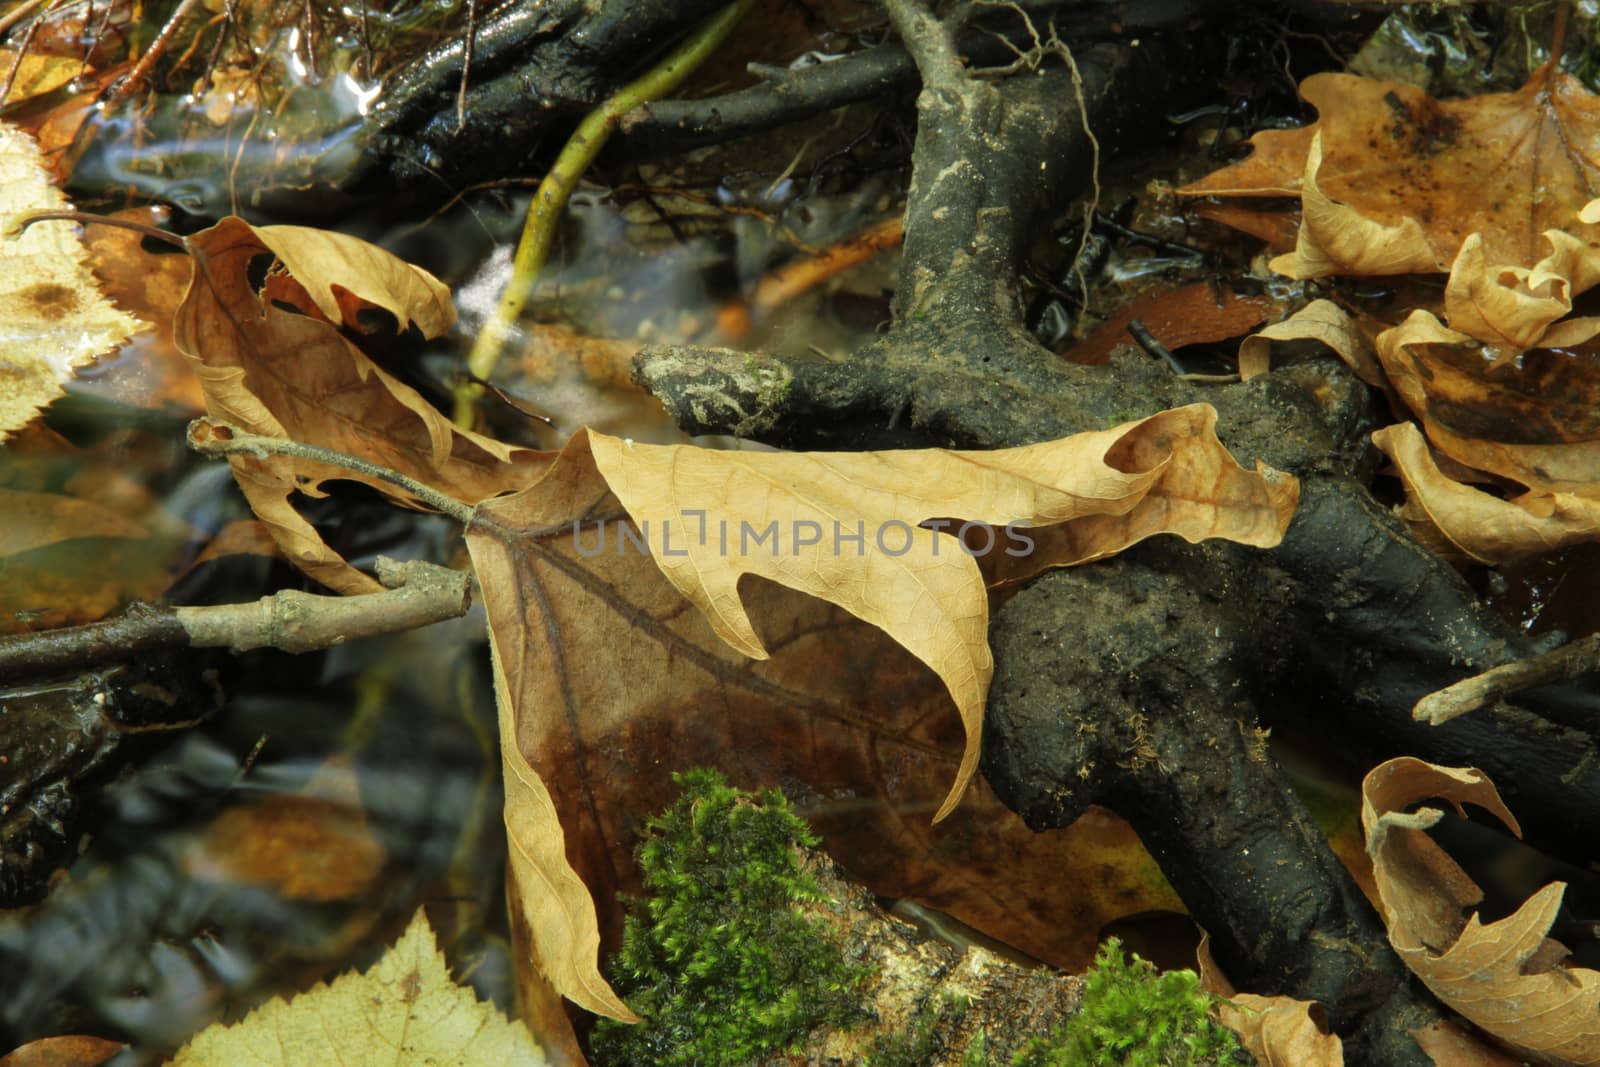 autumn leaf in water by alex_nako